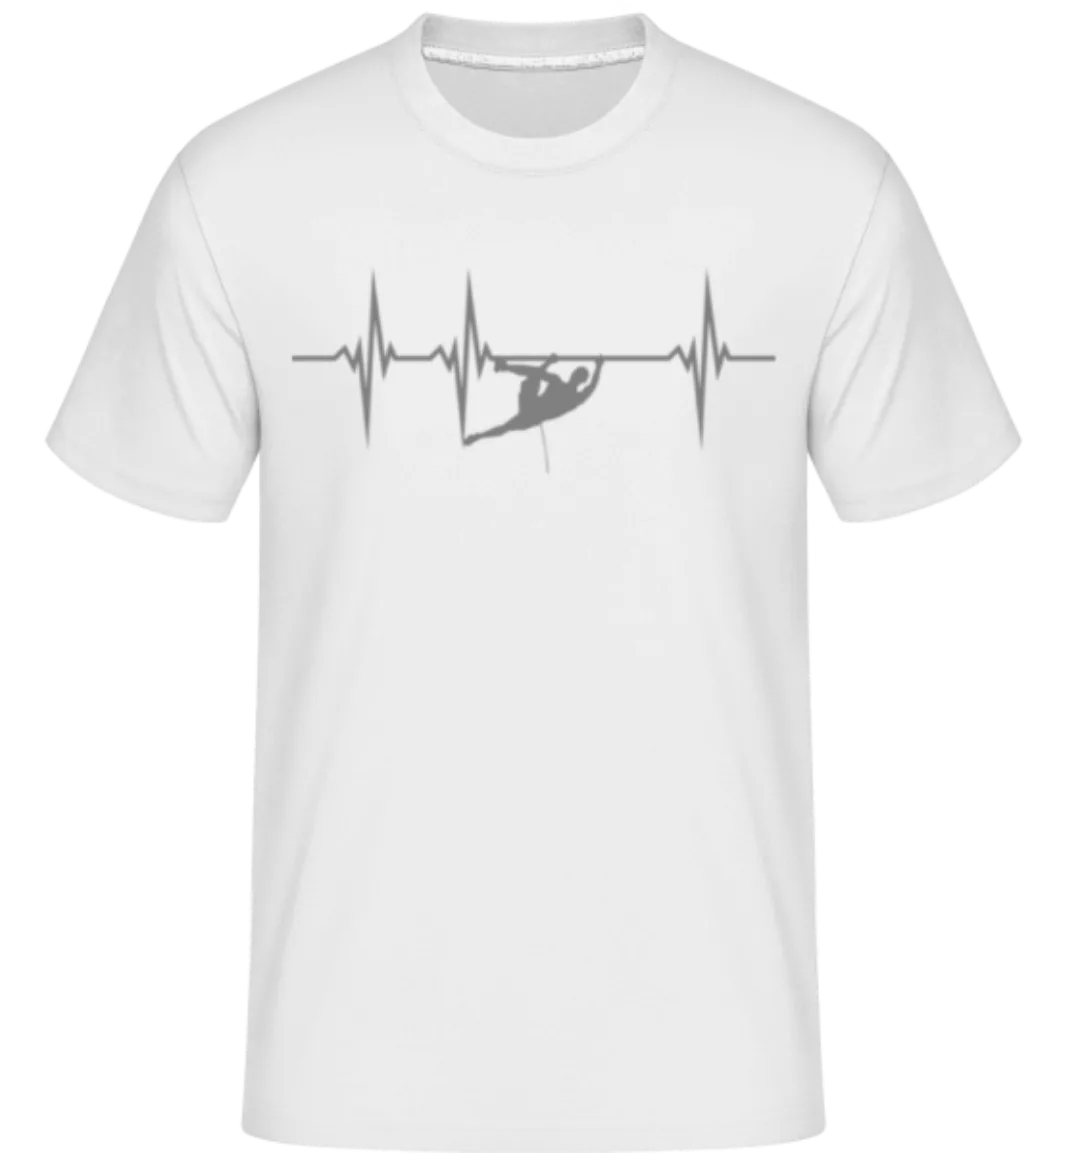 Kletterer Amplitude · Shirtinator Männer T-Shirt günstig online kaufen